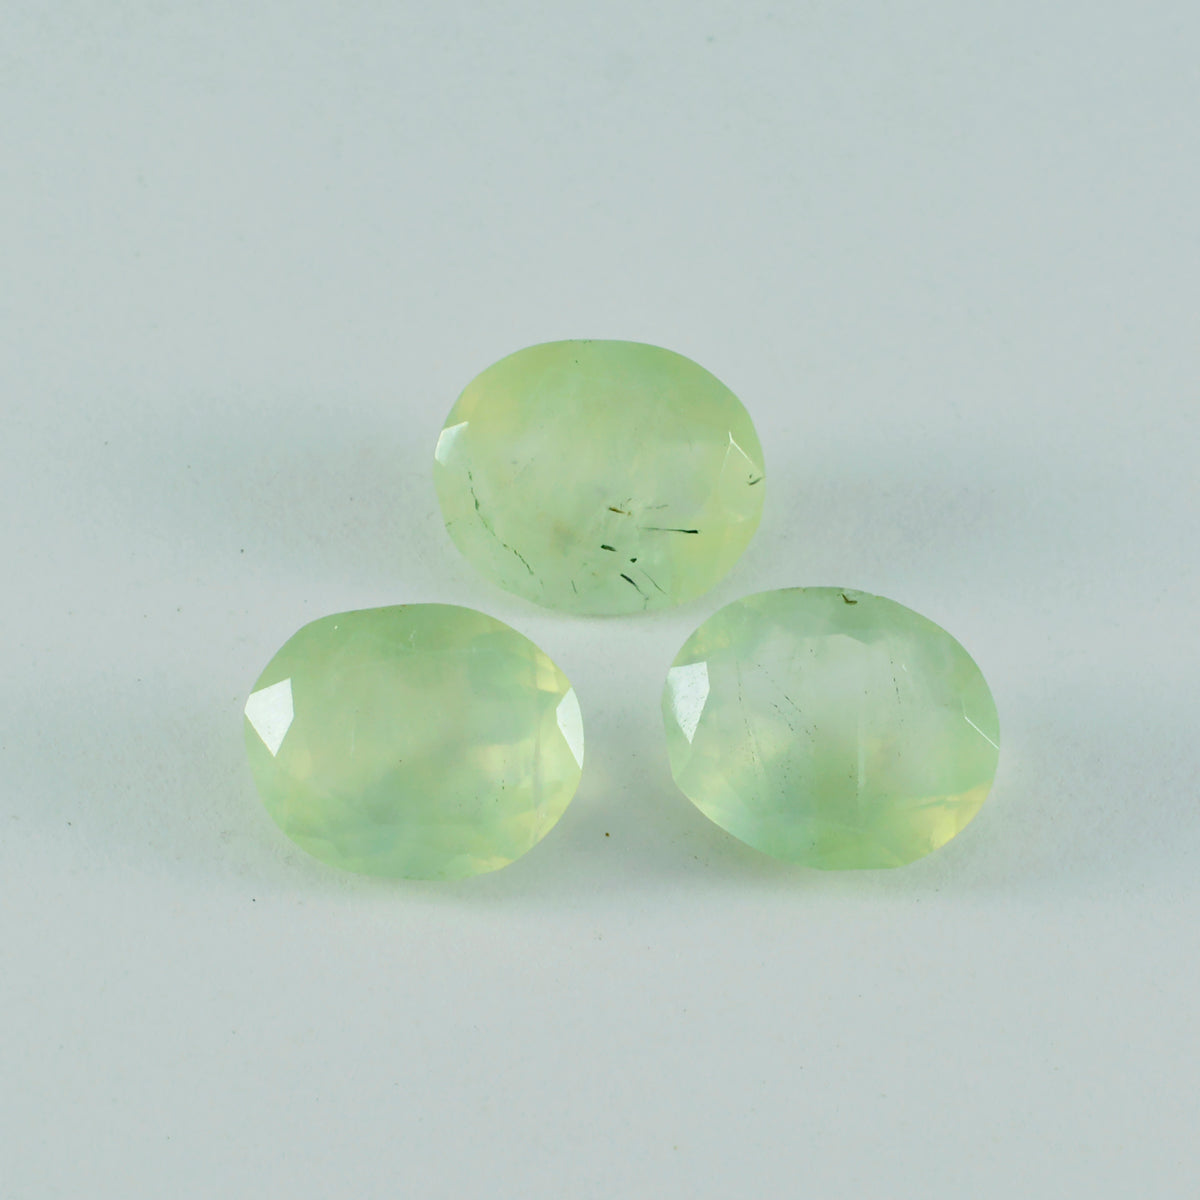 Riyogems 1PC Green Prehnite Faceted 12x16 mm Oval Shape astonishing Quality Stone